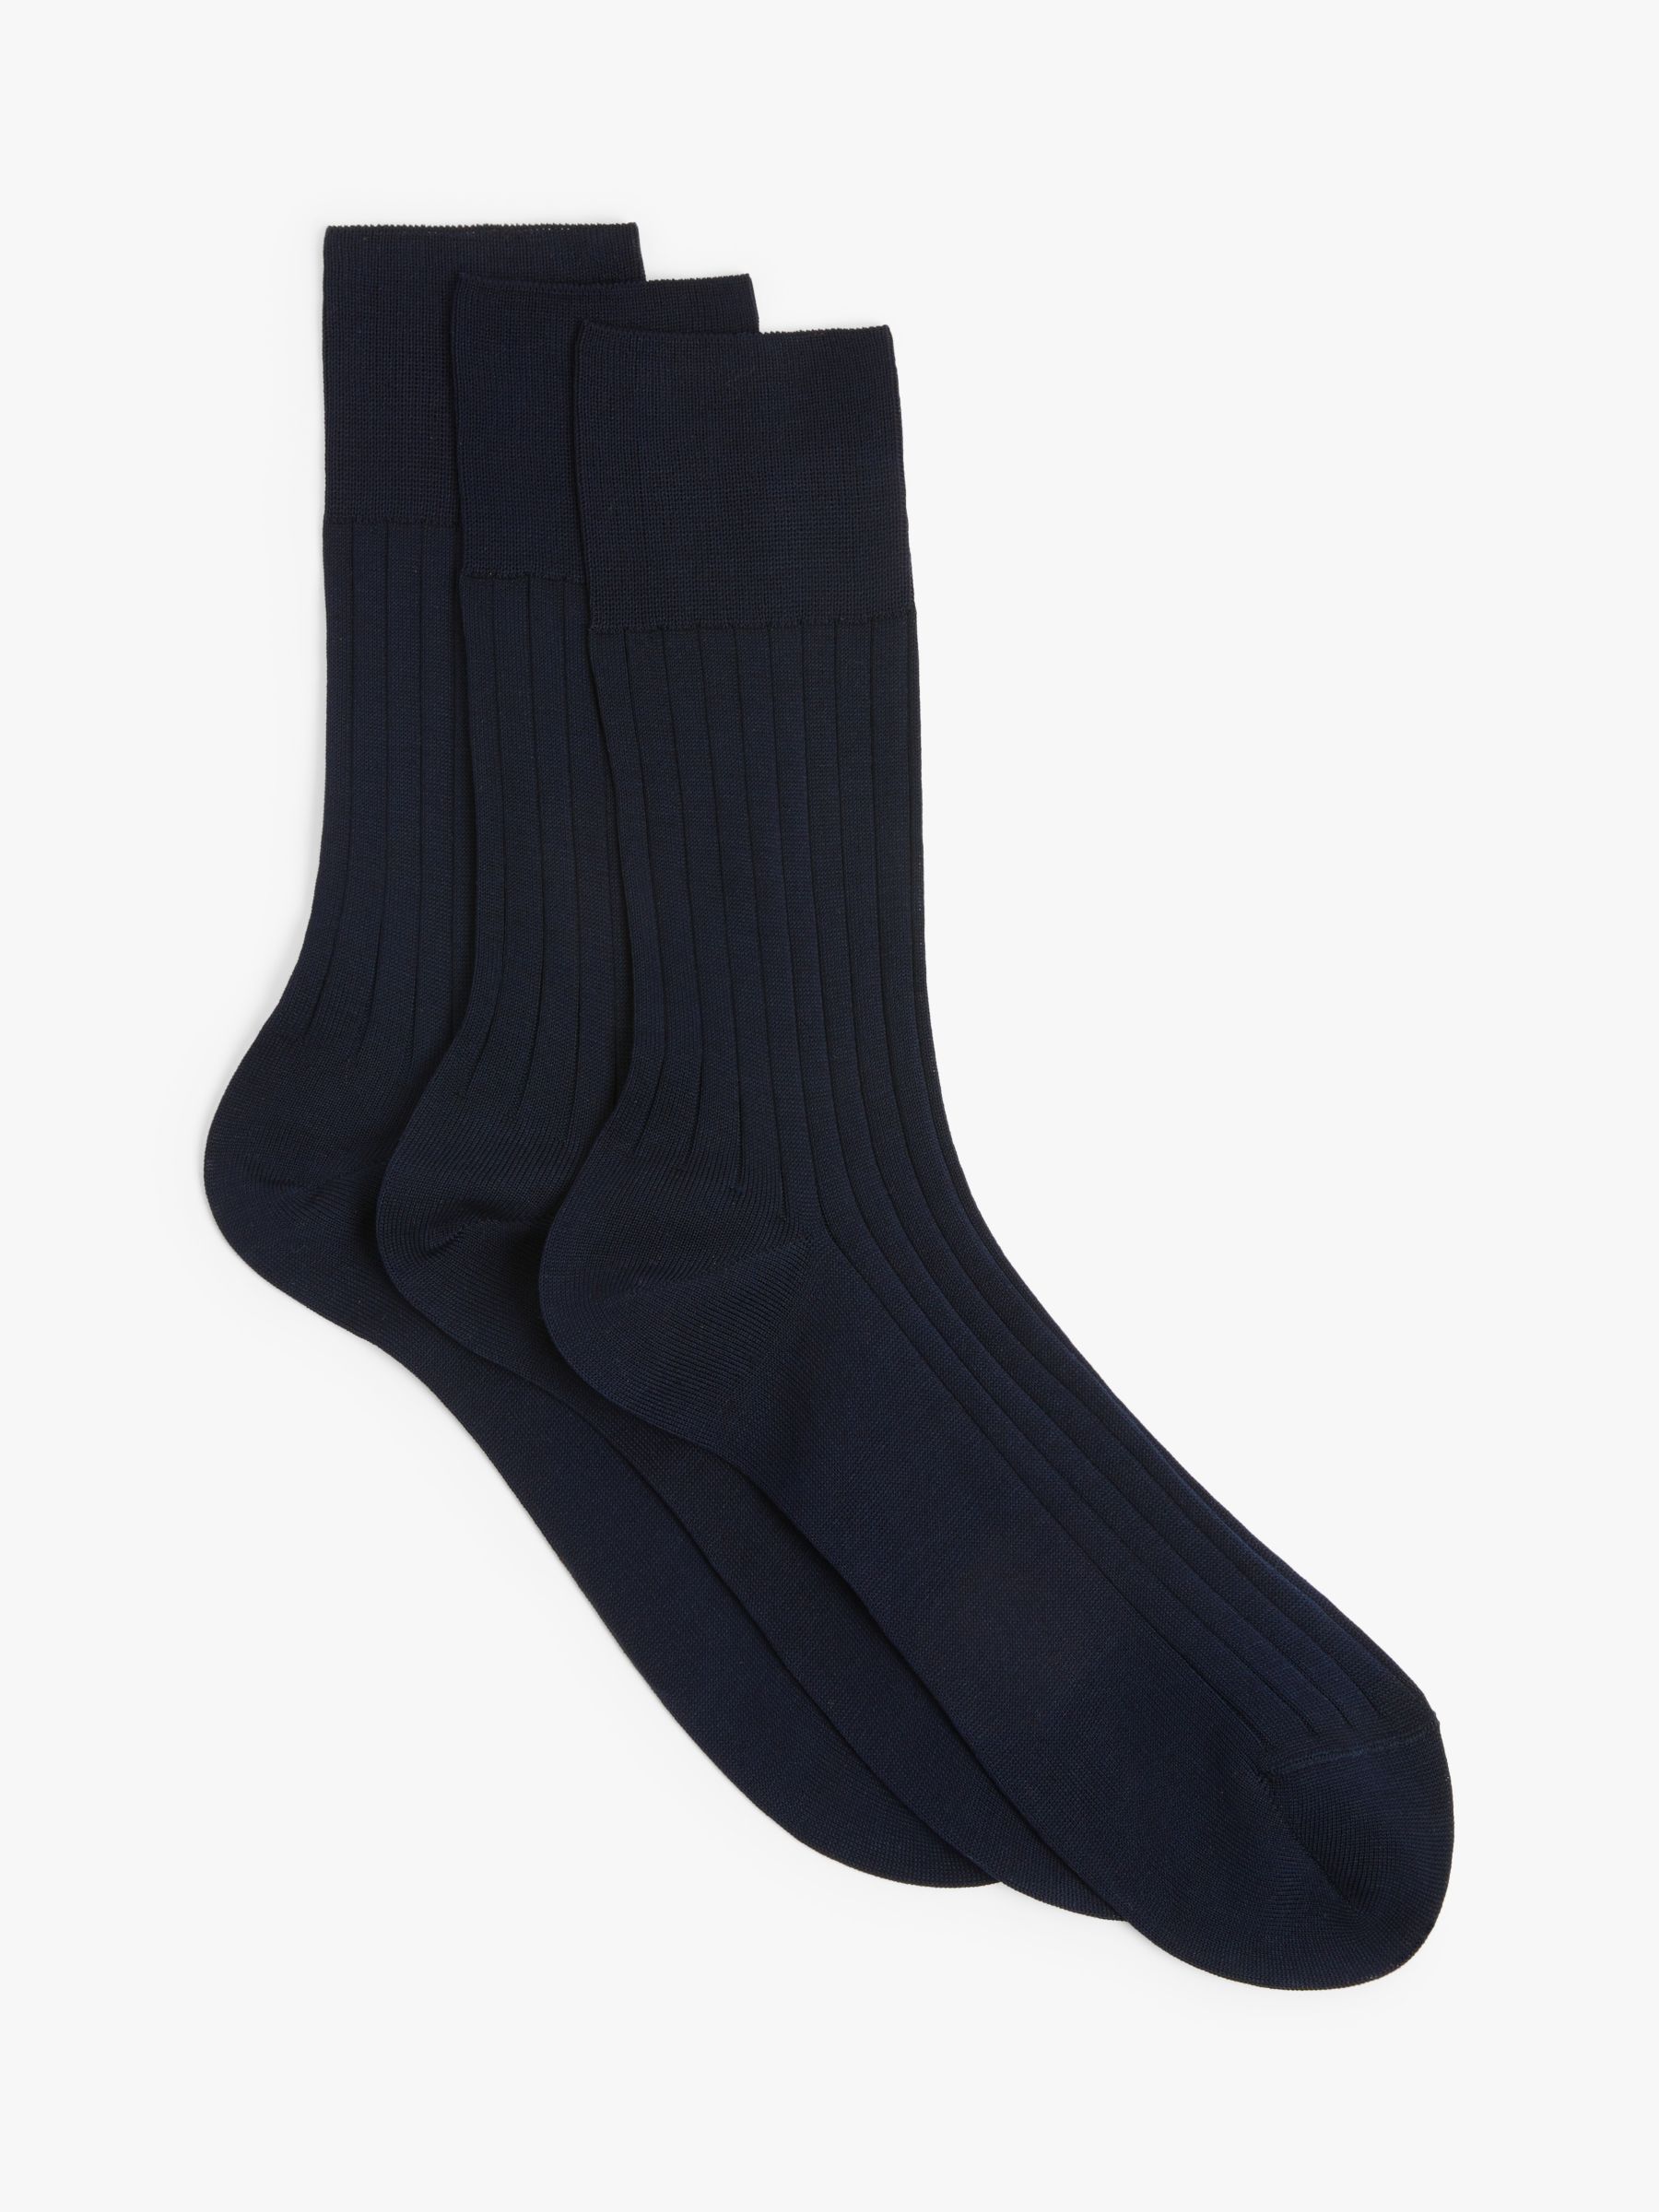 LOUIS STITCH Men's Egyptian Cotton socks Luxury (Size- Full Length